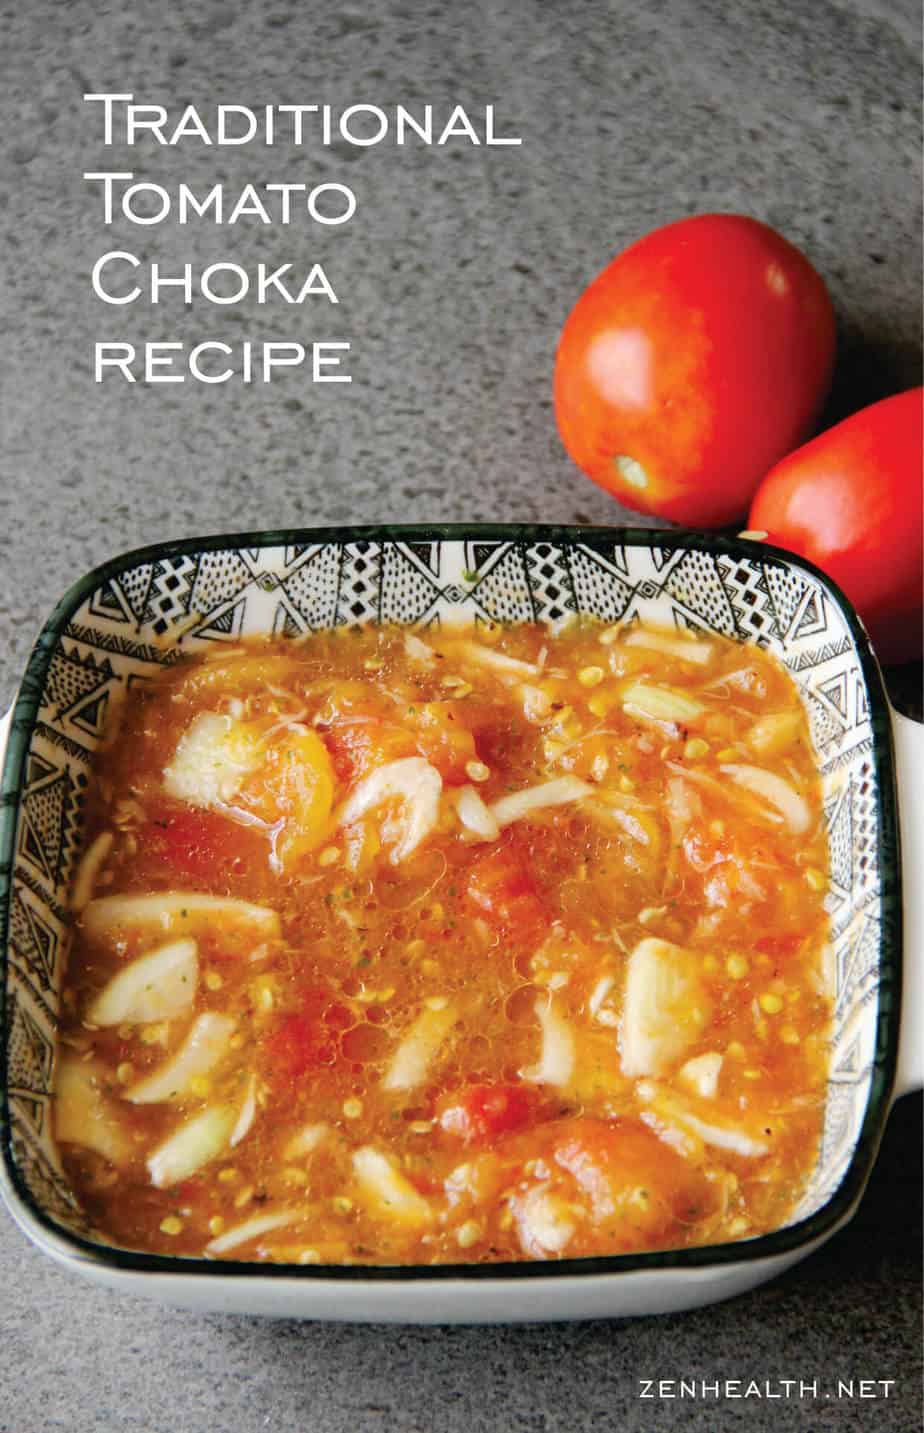 Traditional tomato choka recipe